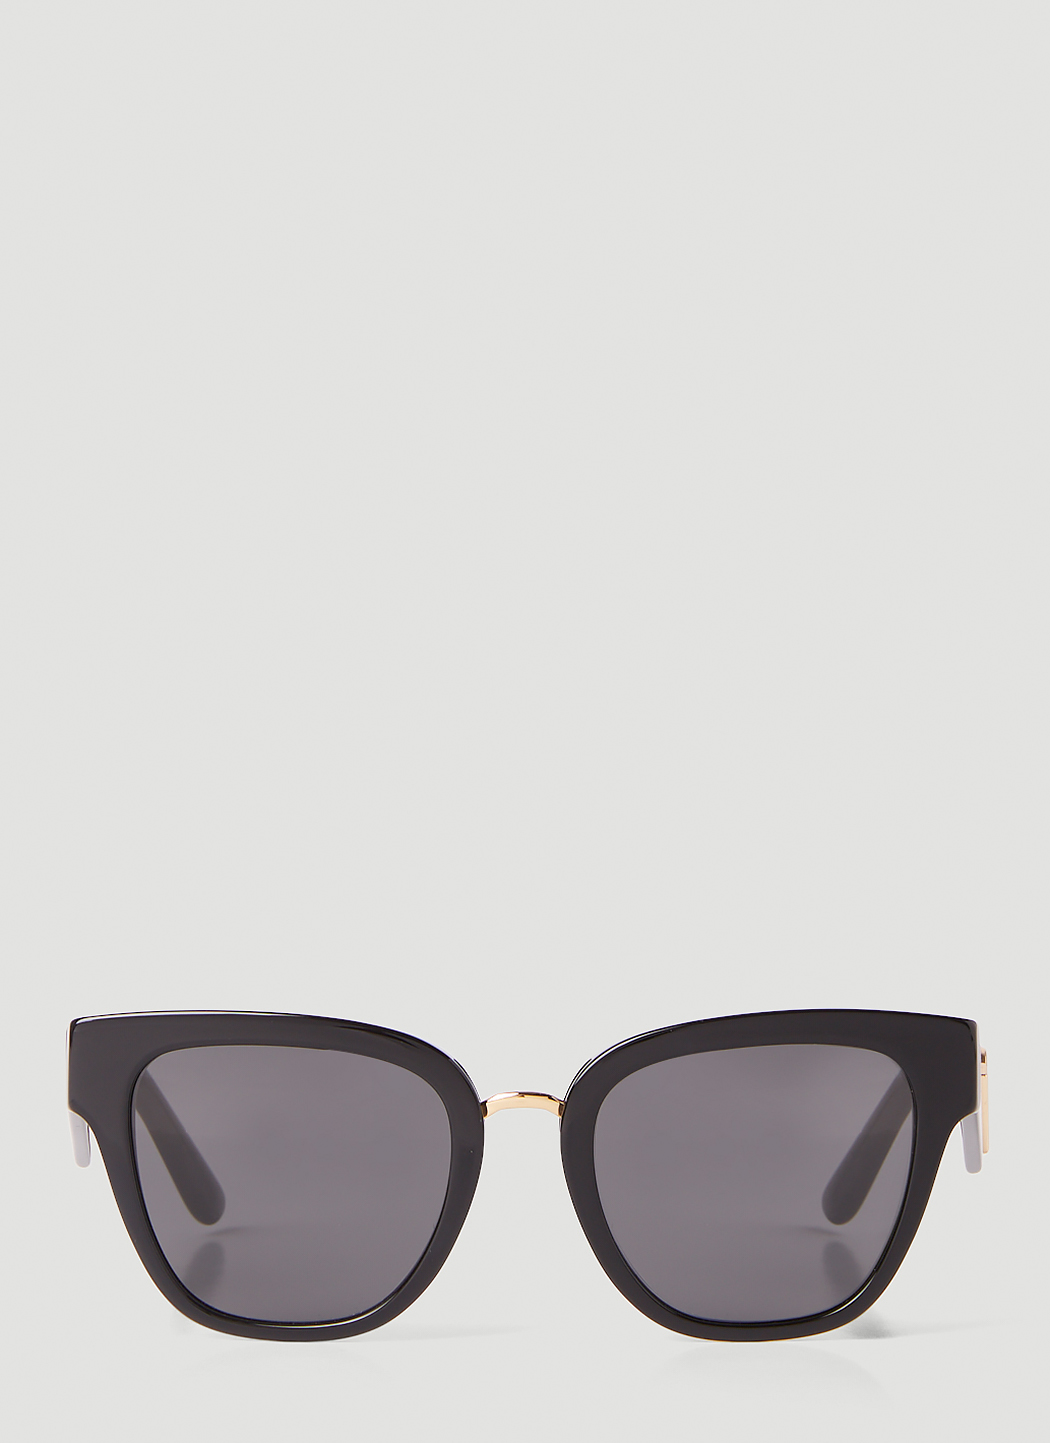 Dolce&Gabbana Crossed Sunglasses